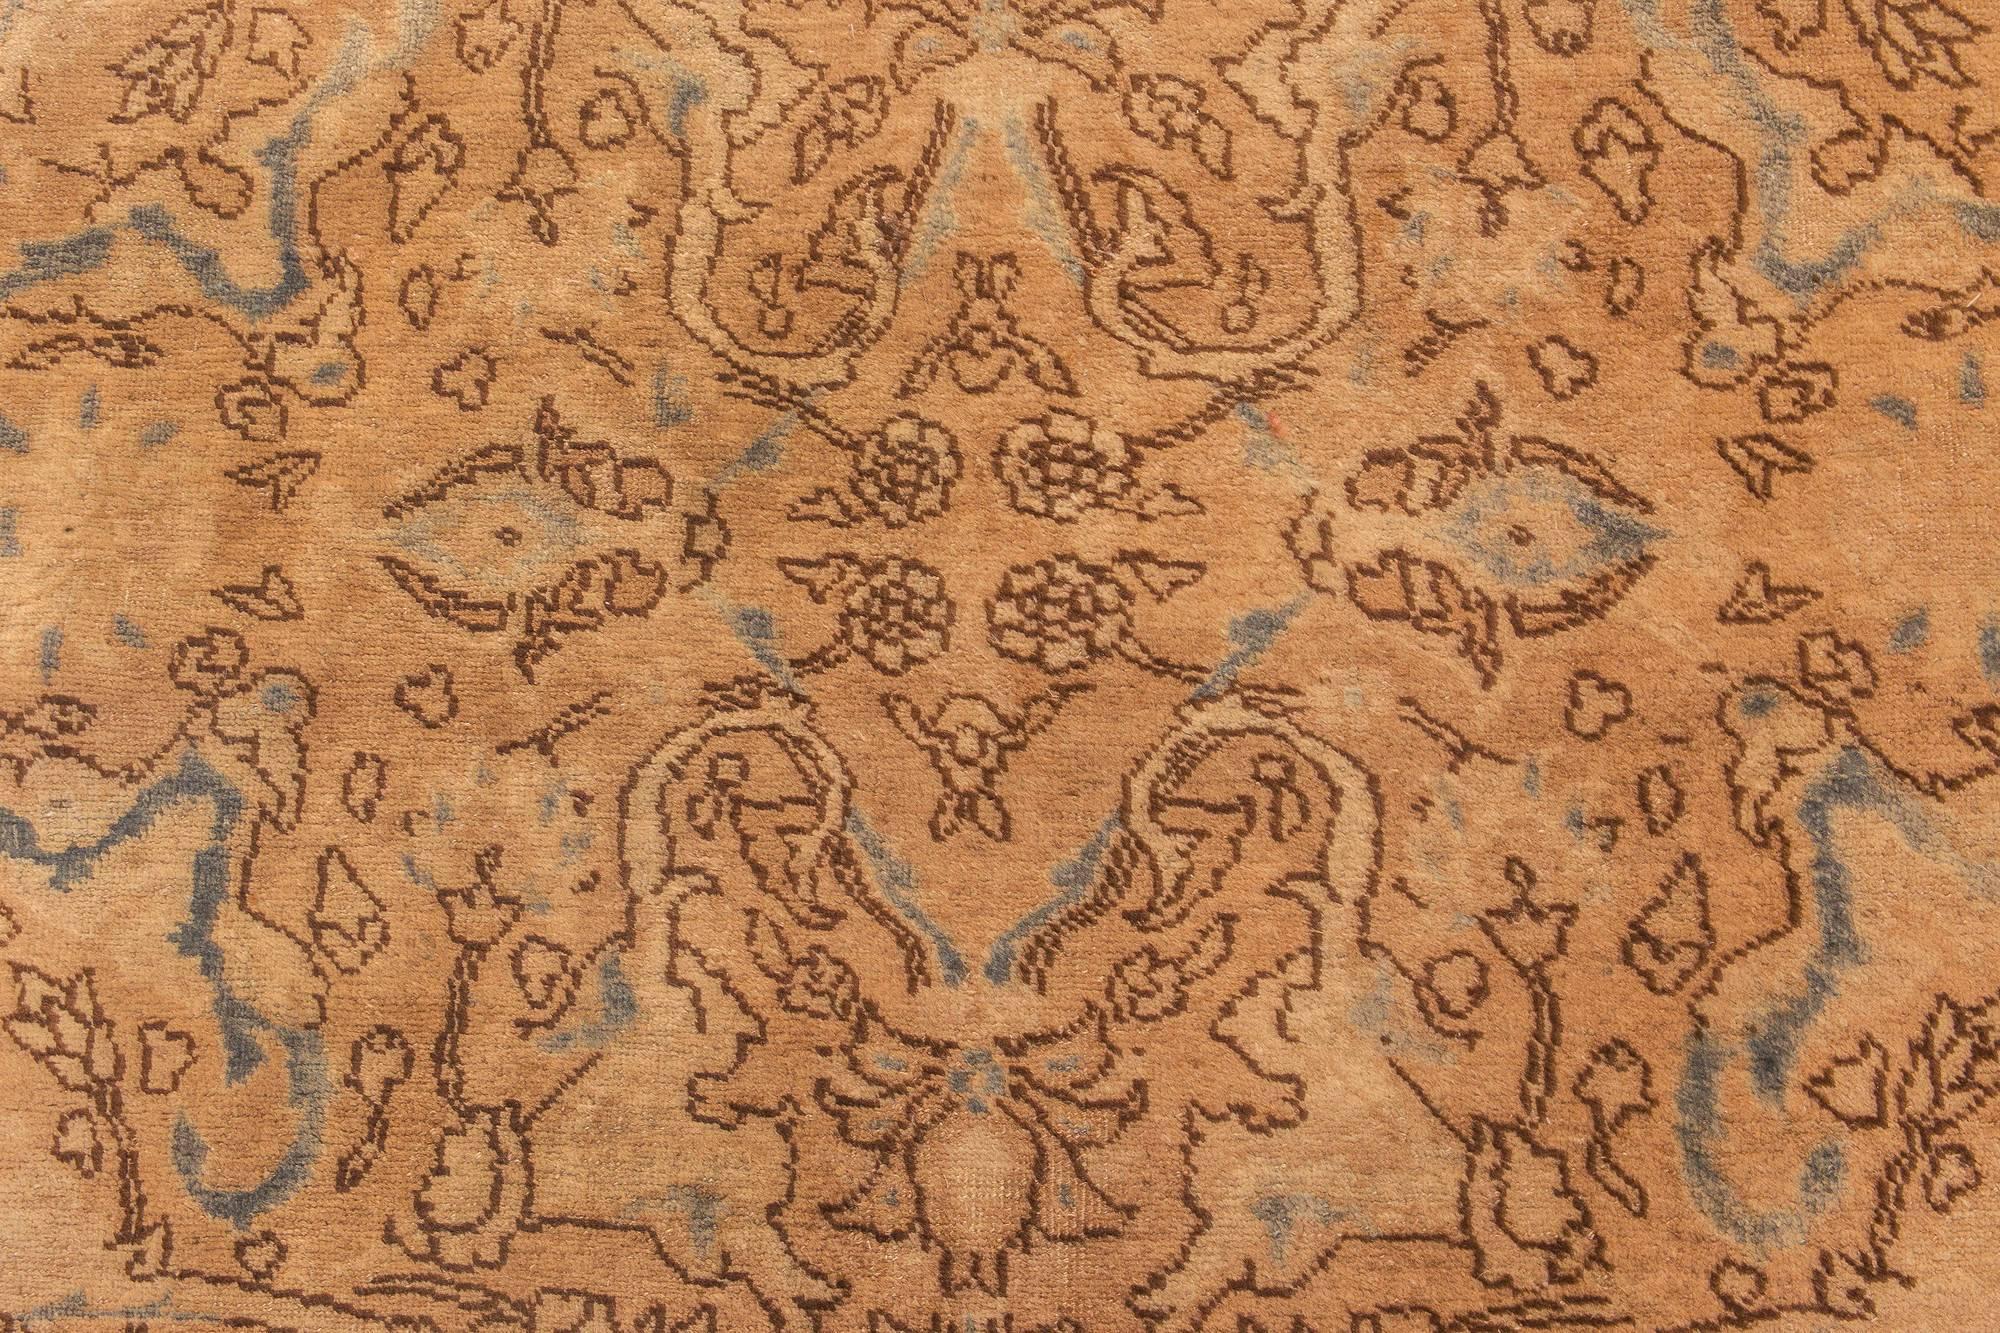 Antique Persian Tabriz floral handmade wool rug
Size: 11'5